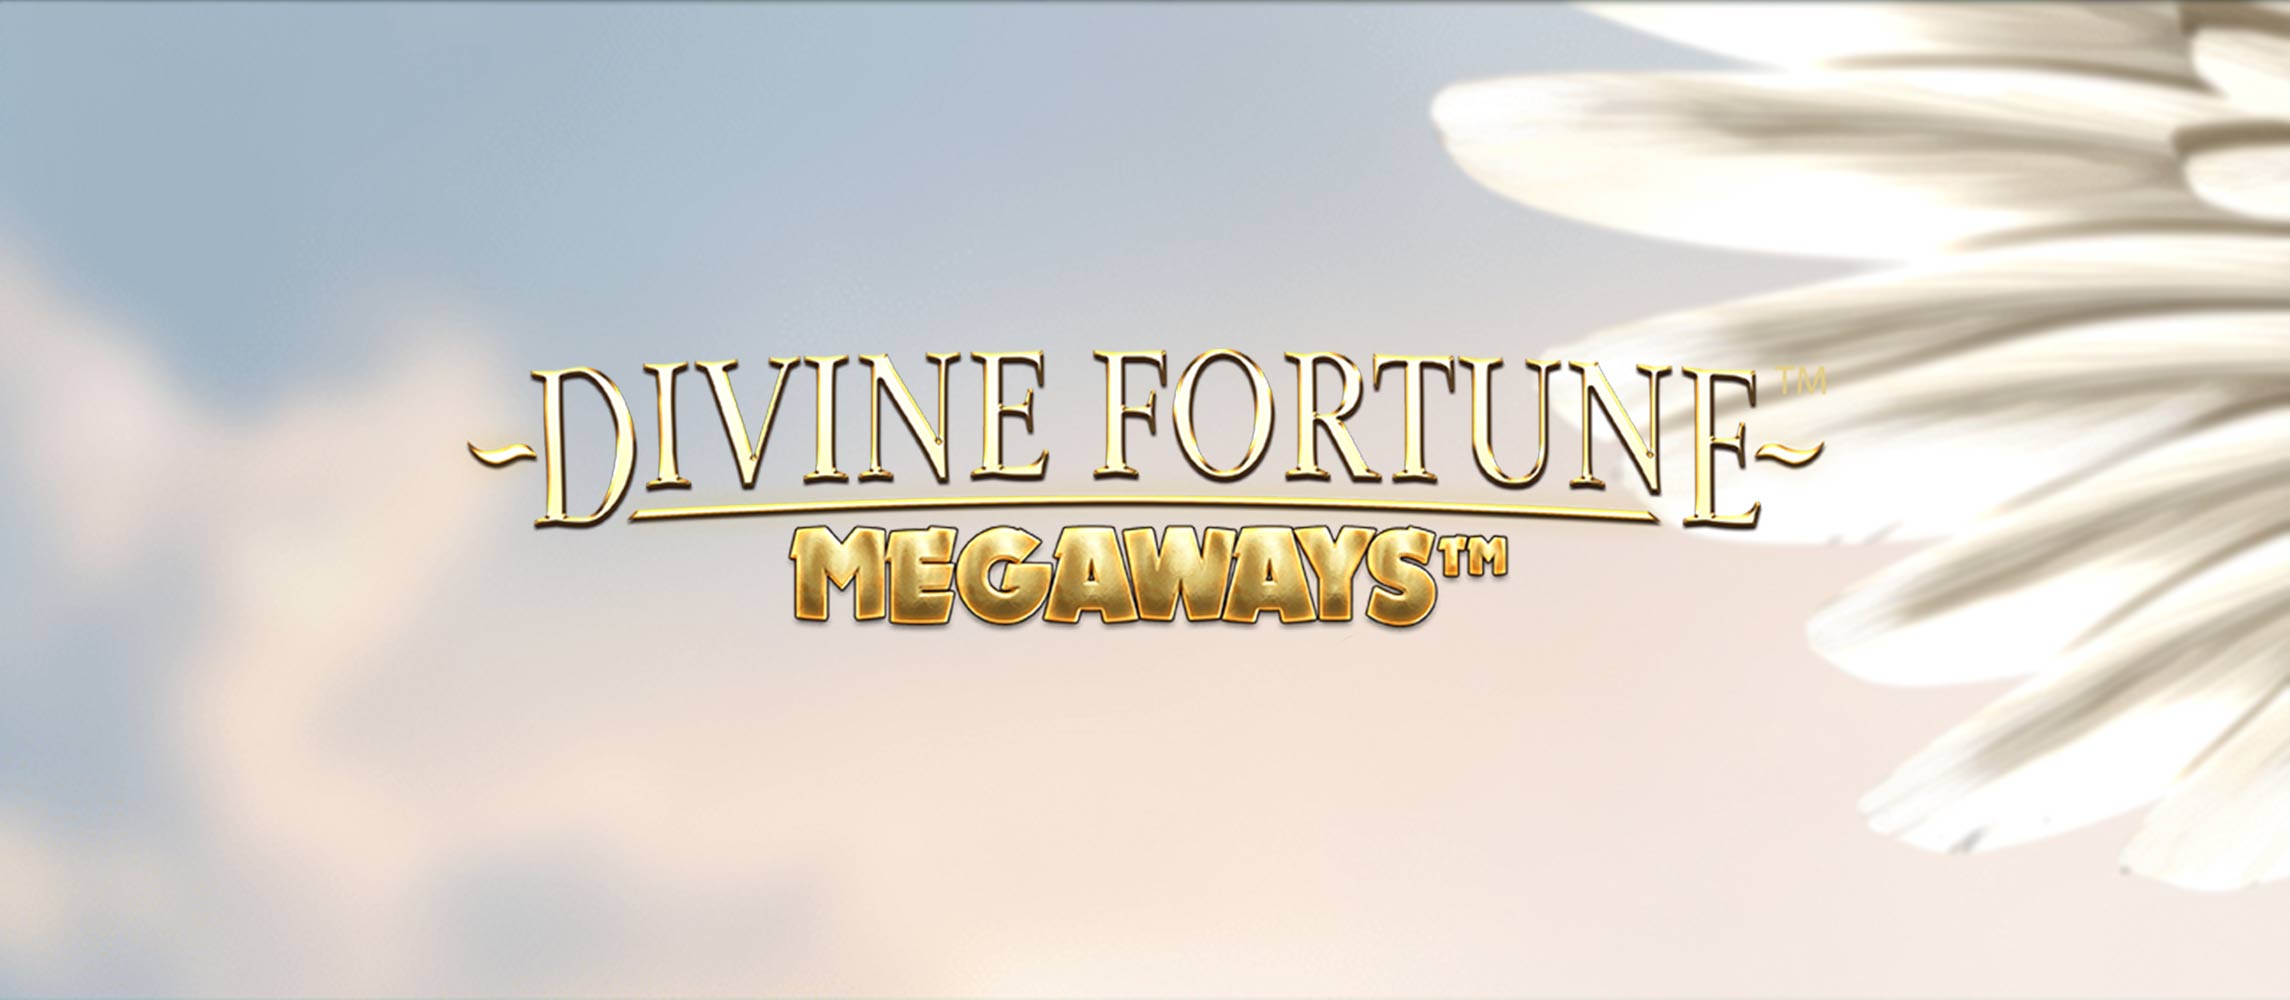 Divine Fortune Megaways Slot by NetEnt